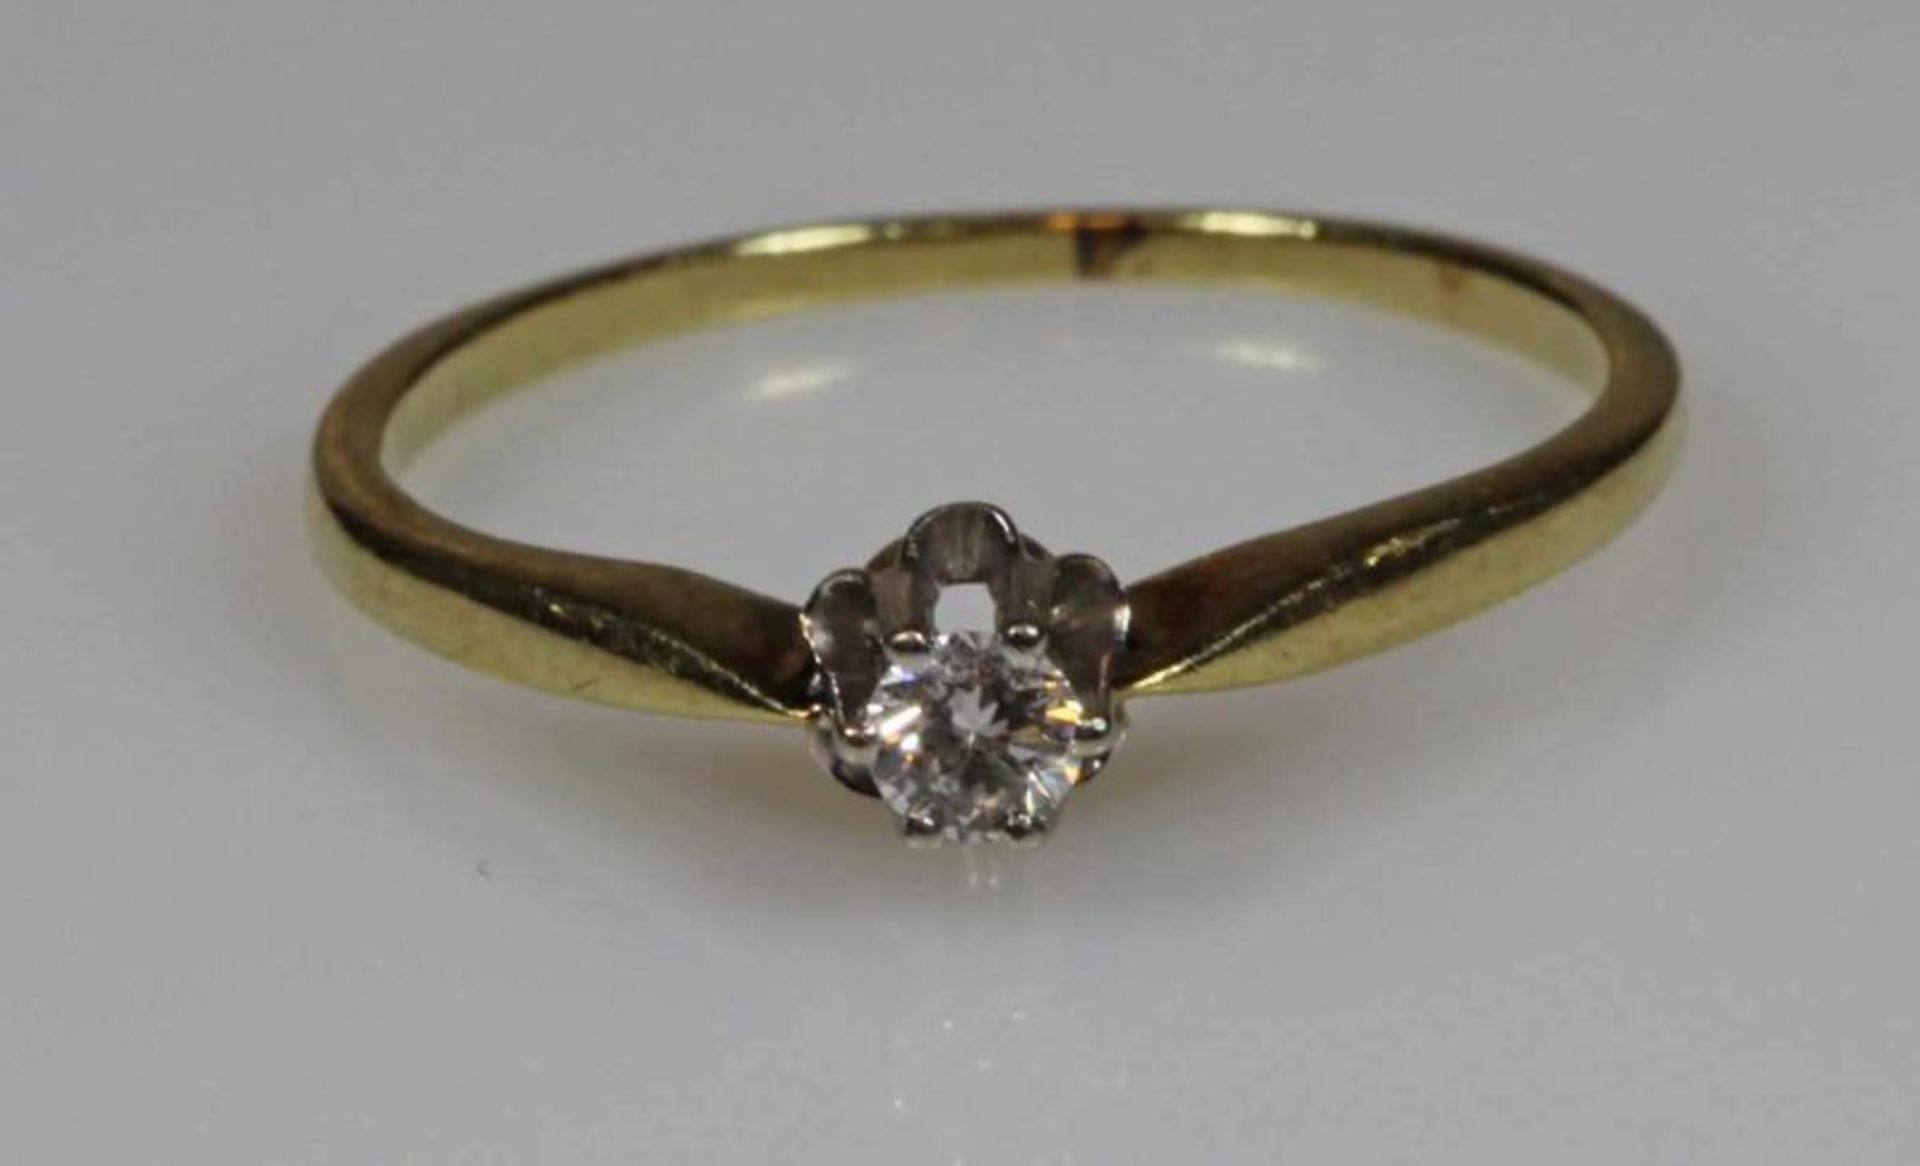 Ring, WG/GG 585, 1 kleiner Brillant ca. 0.07 ct., RM 17 20.00 % buyer's premium on the hammer